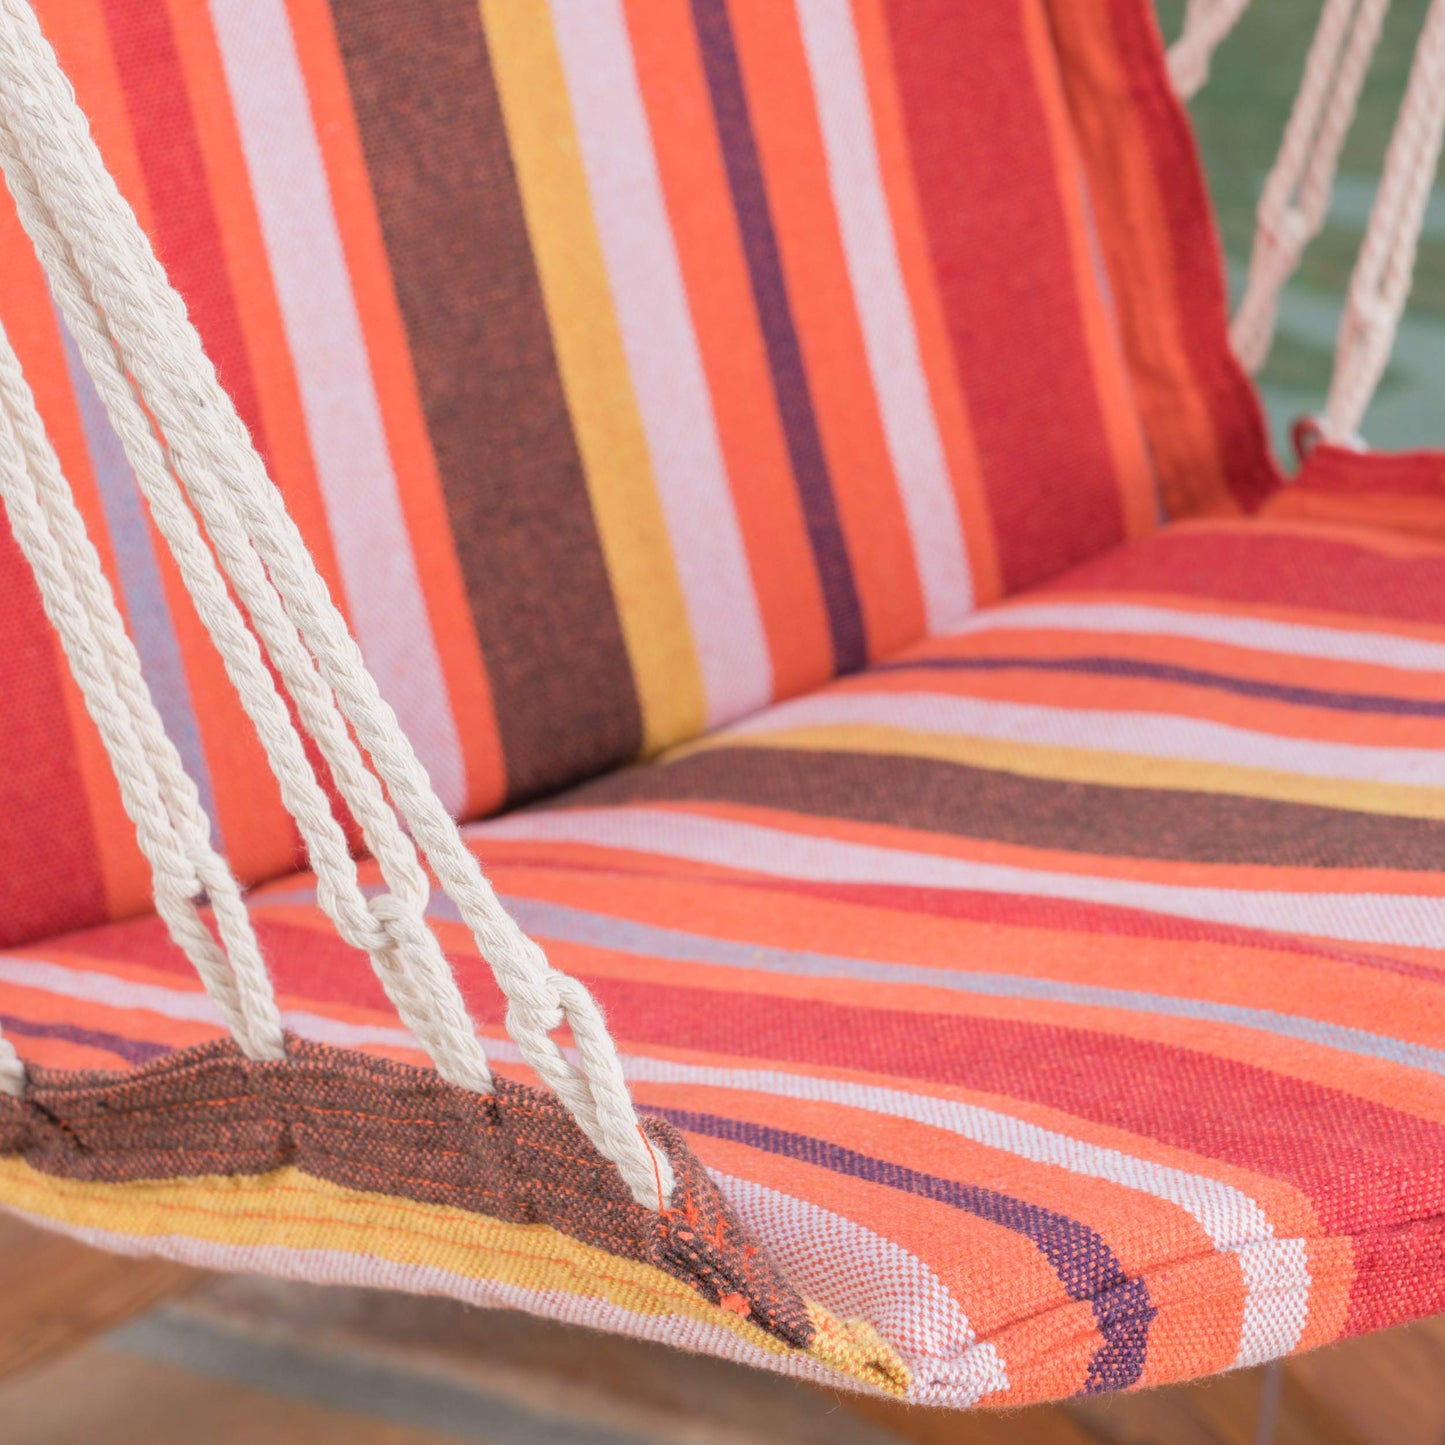 Mavis Fabric Hanging Chair - GDFStudio